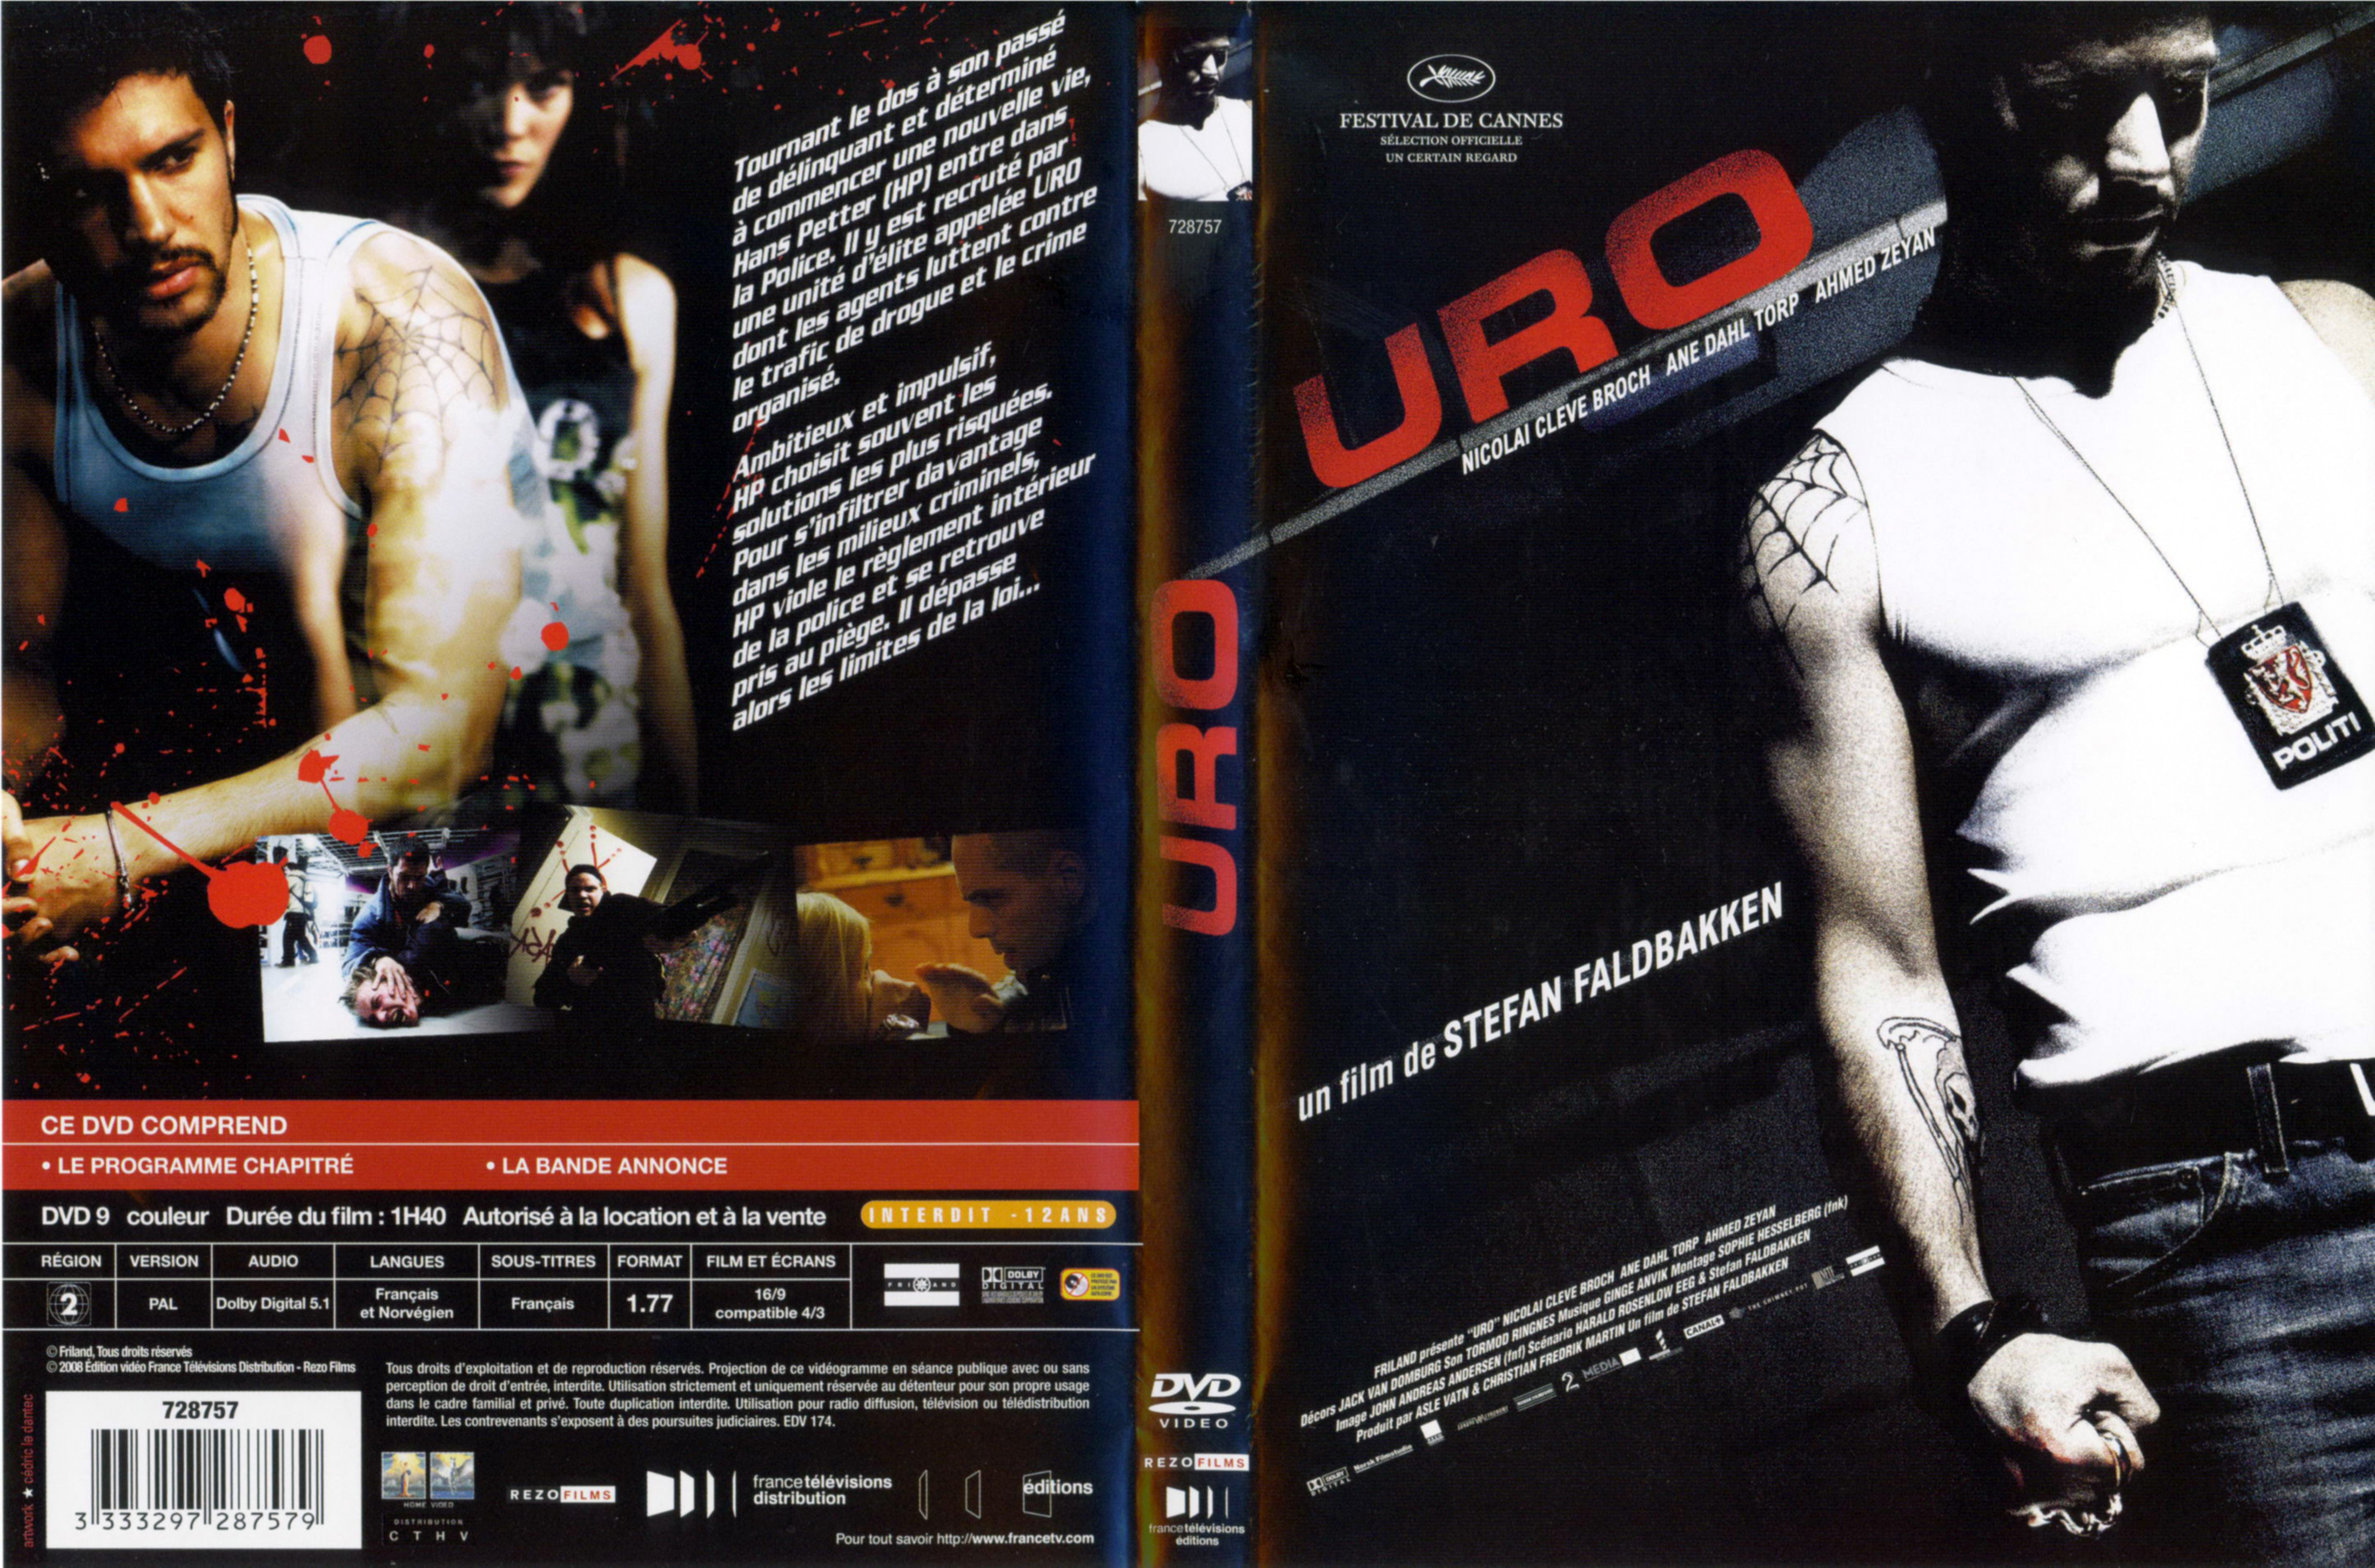 Jaquette DVD Uro